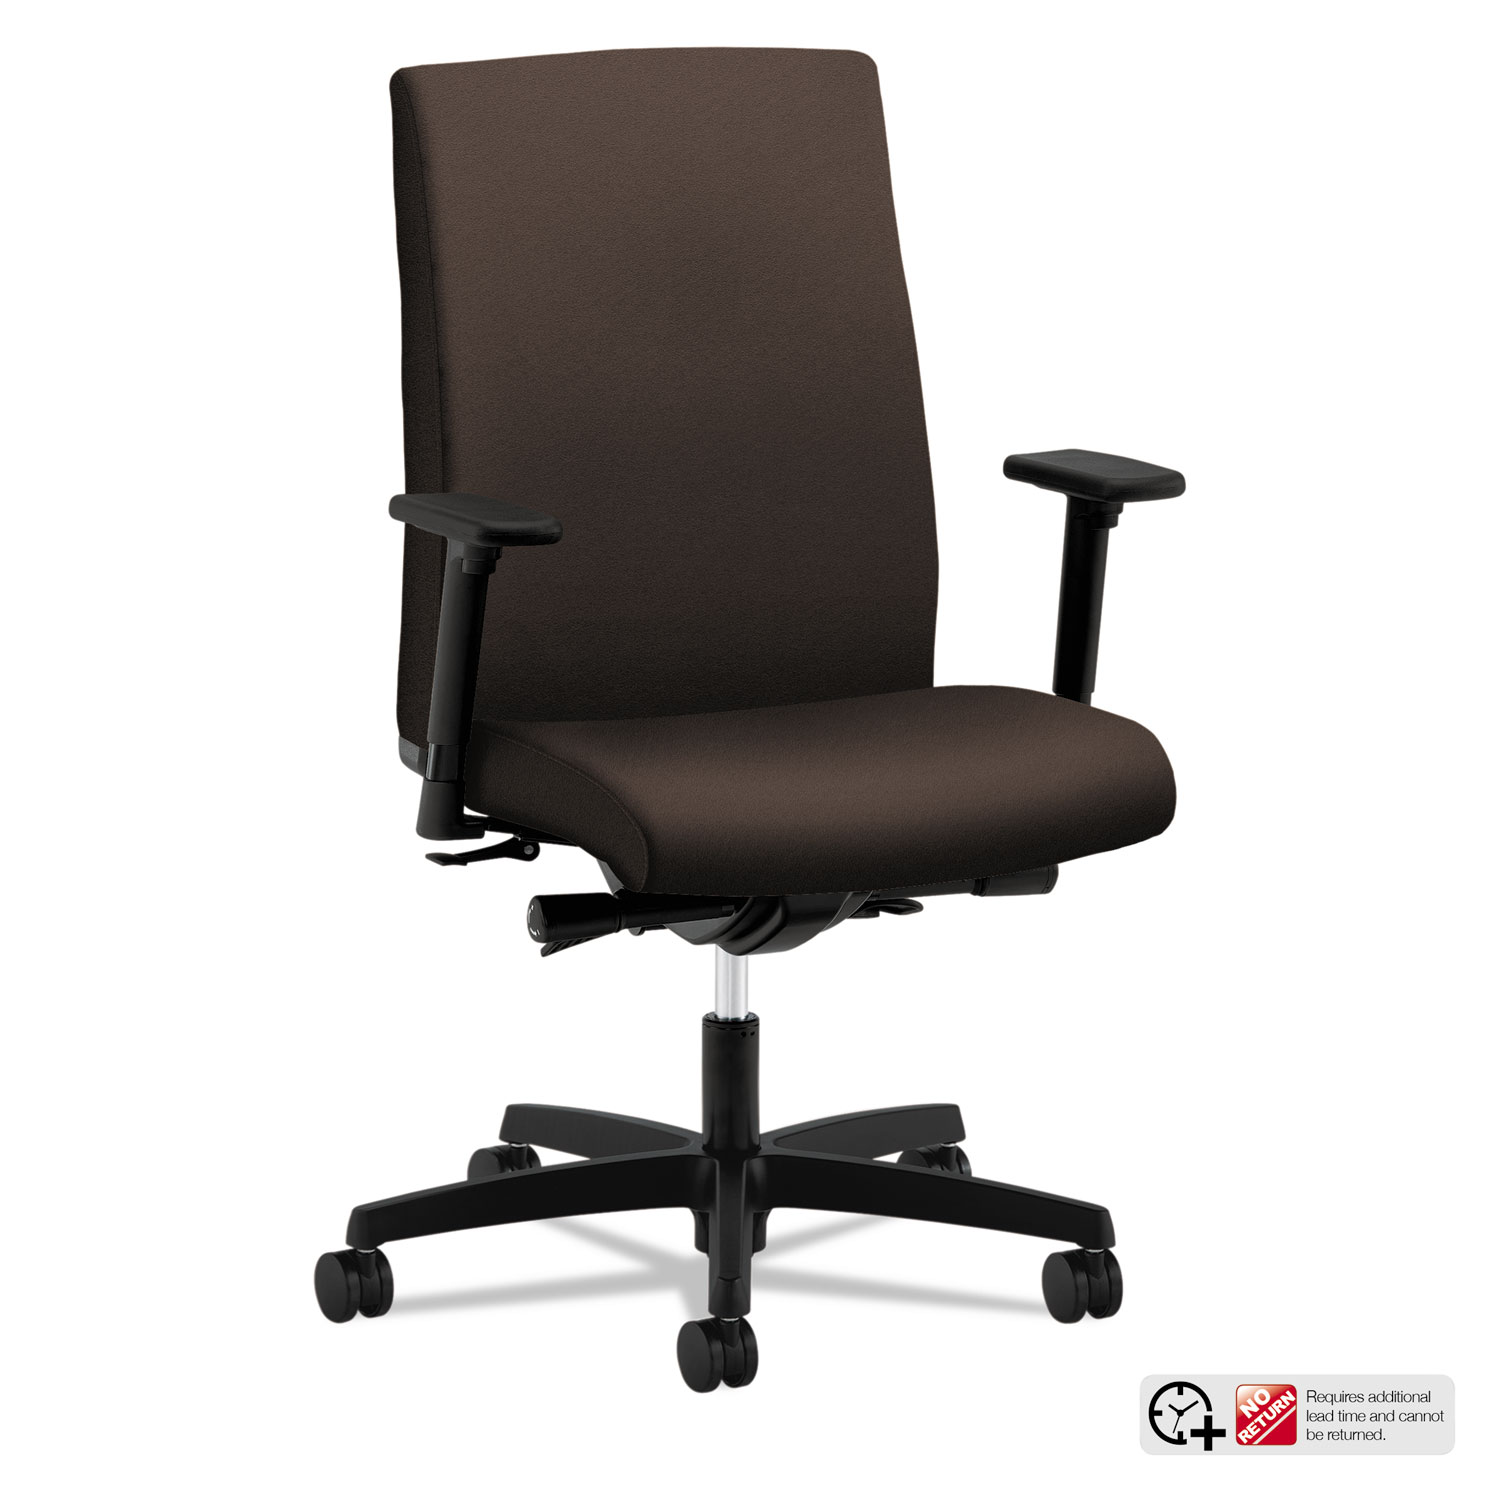  HON HIWM3.A.H.U.CU49.T.SB Ignition Series Mid-Back Work Chair, Supports up to 300 lbs., Espresso Seat/Espresso Back, Black Base (HONIW104CU49) 